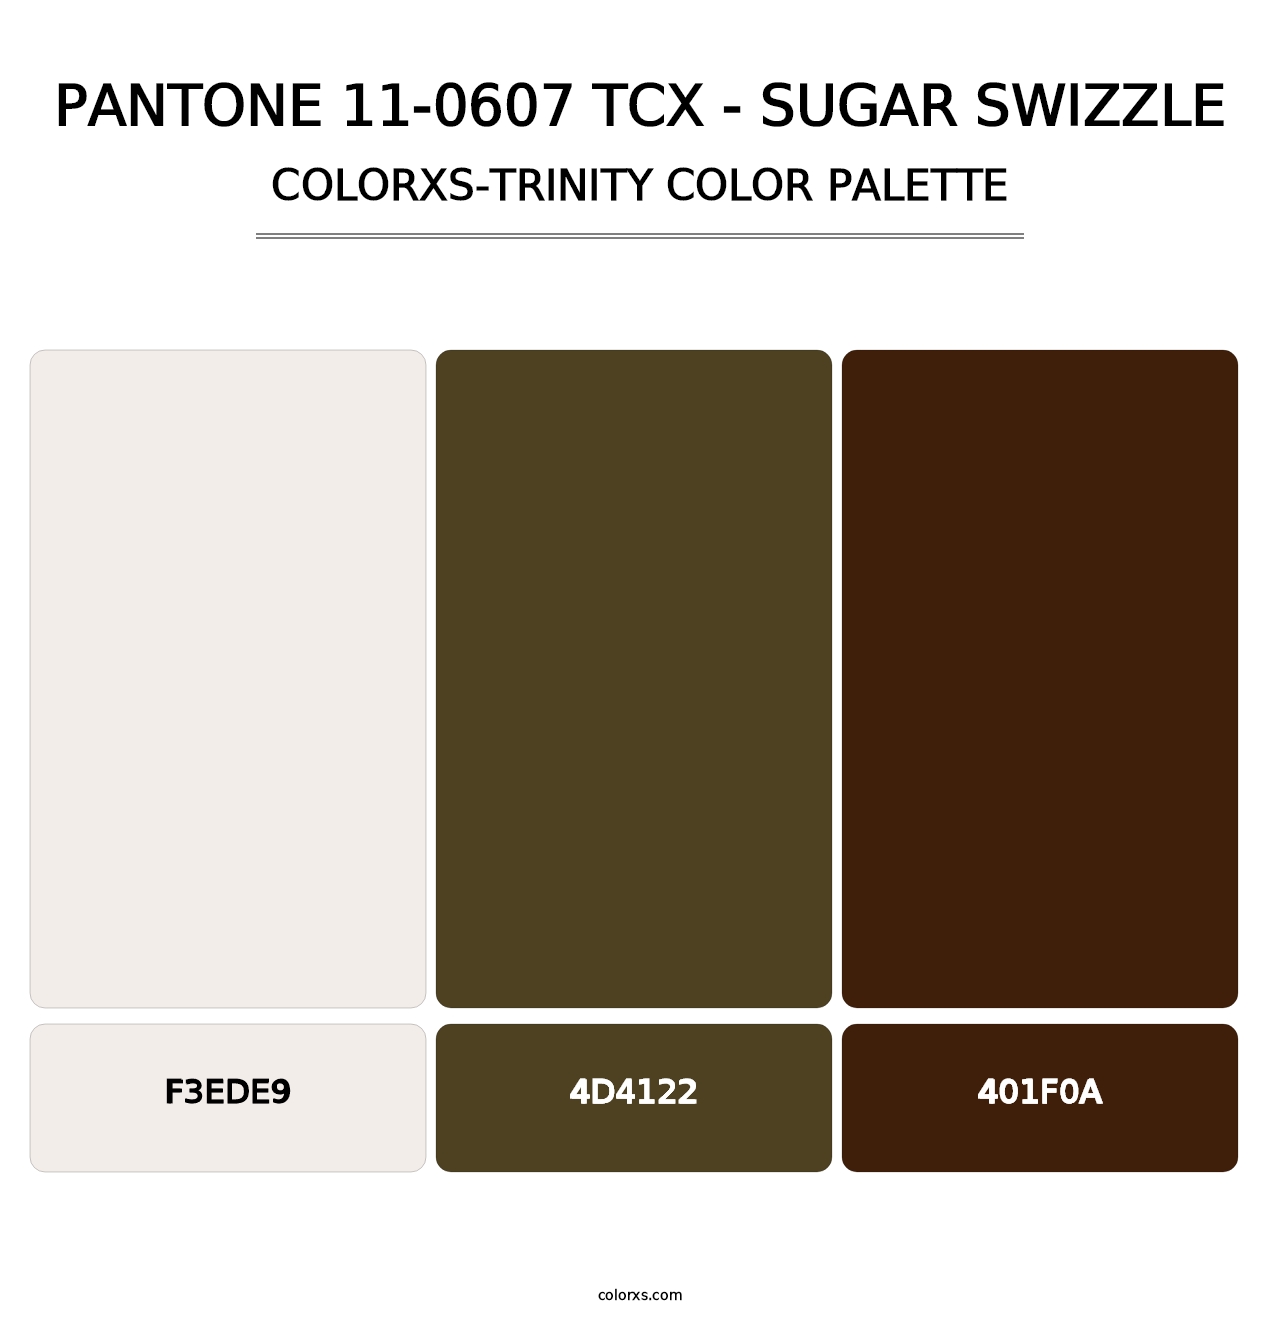 PANTONE 11-0607 TCX - Sugar Swizzle - Colorxs Trinity Palette